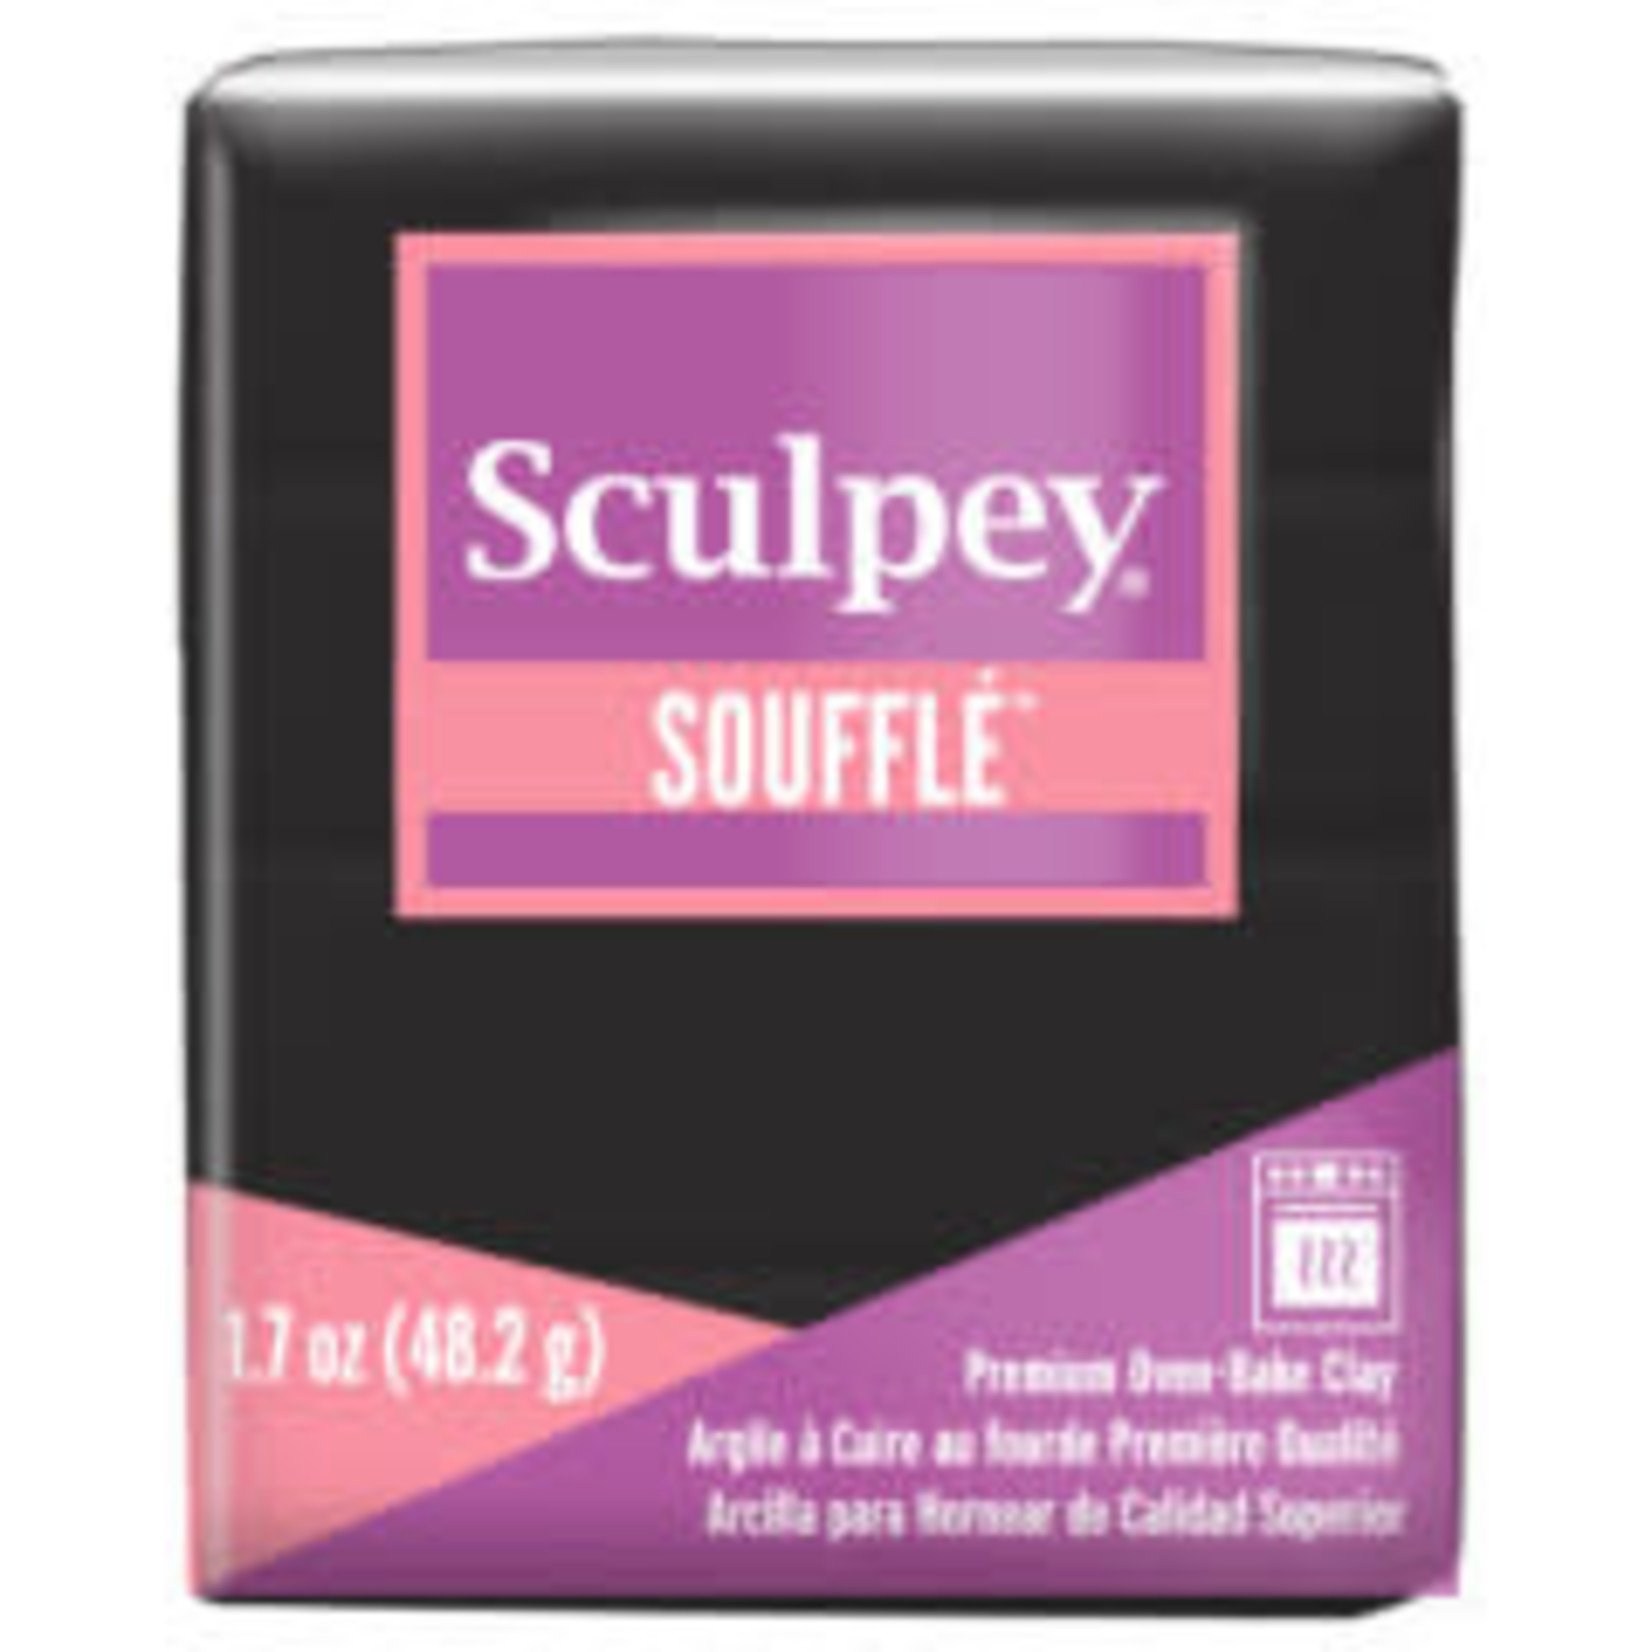 Sculpey Sculpey Souffle Poppy Seed 7 oz